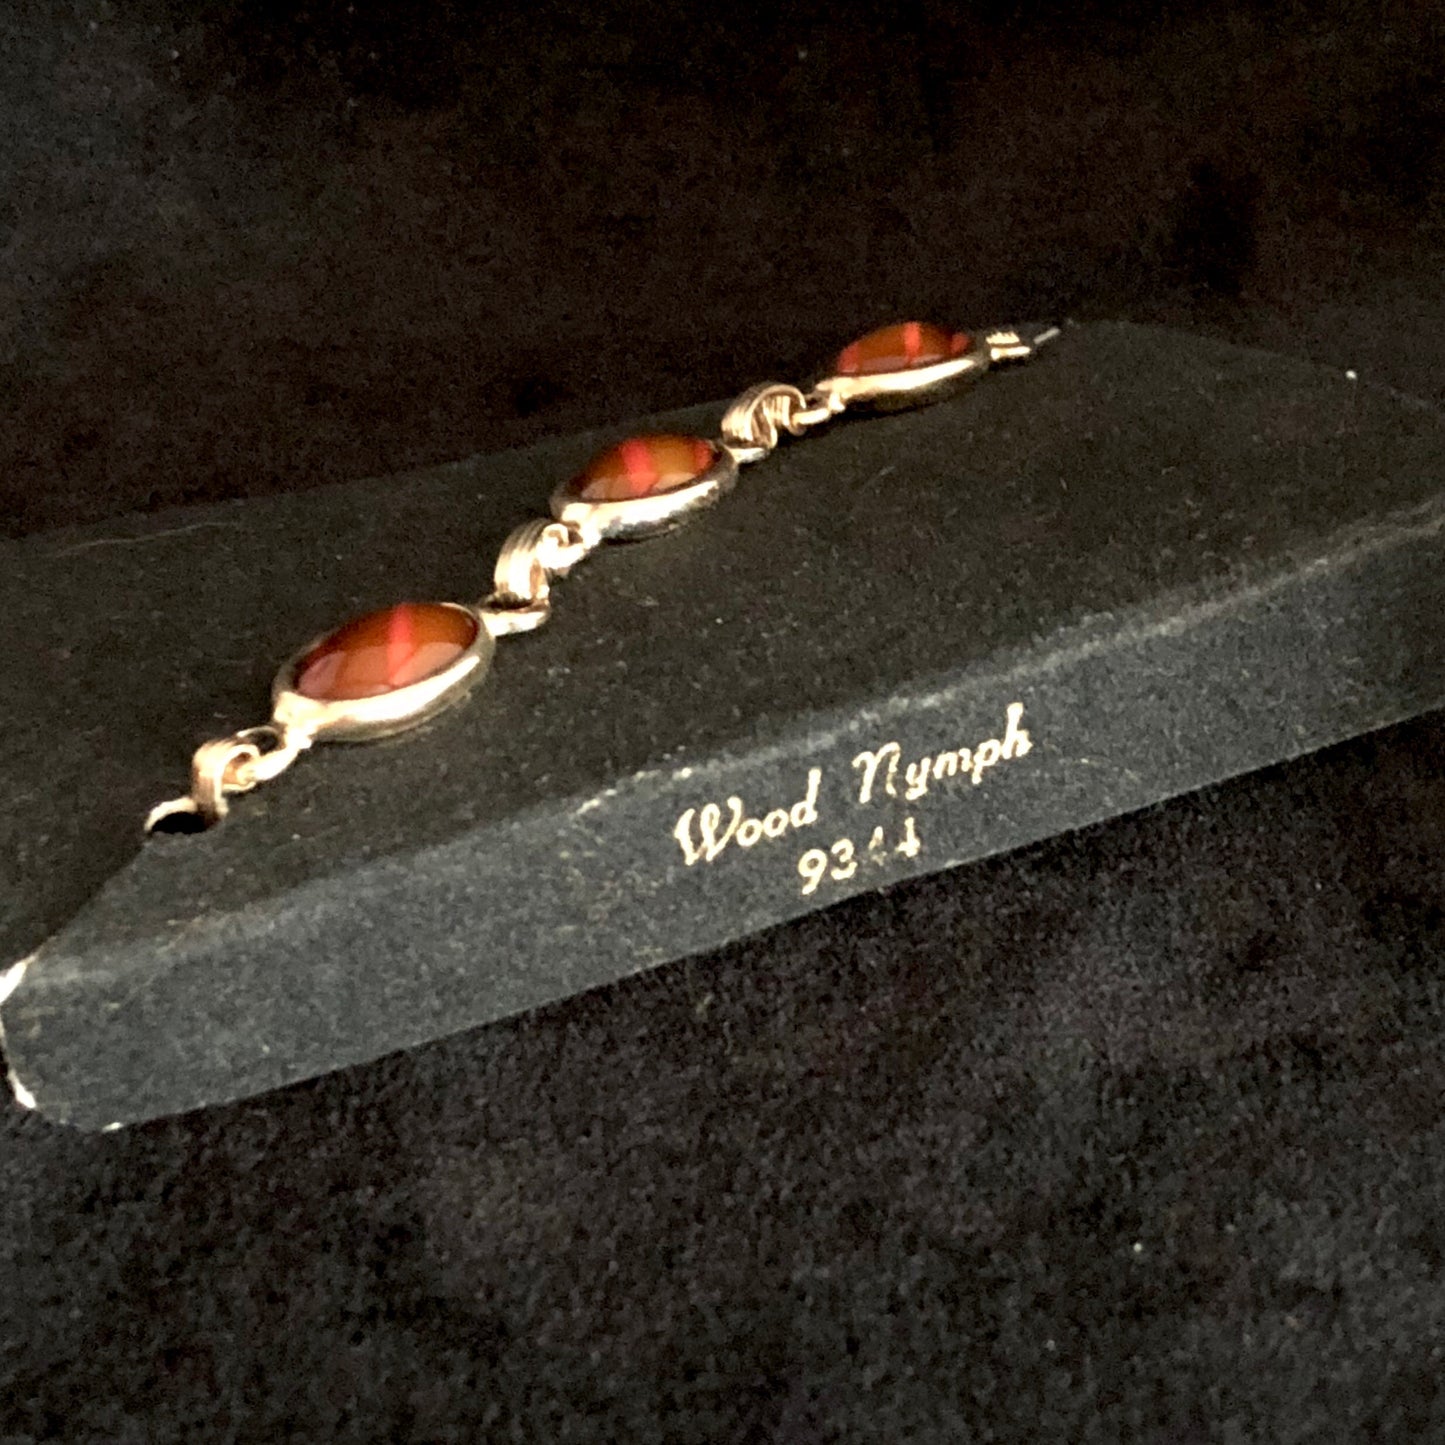 1970 Avon Wood Nymph Bracelet - Retro Kandy Vintage